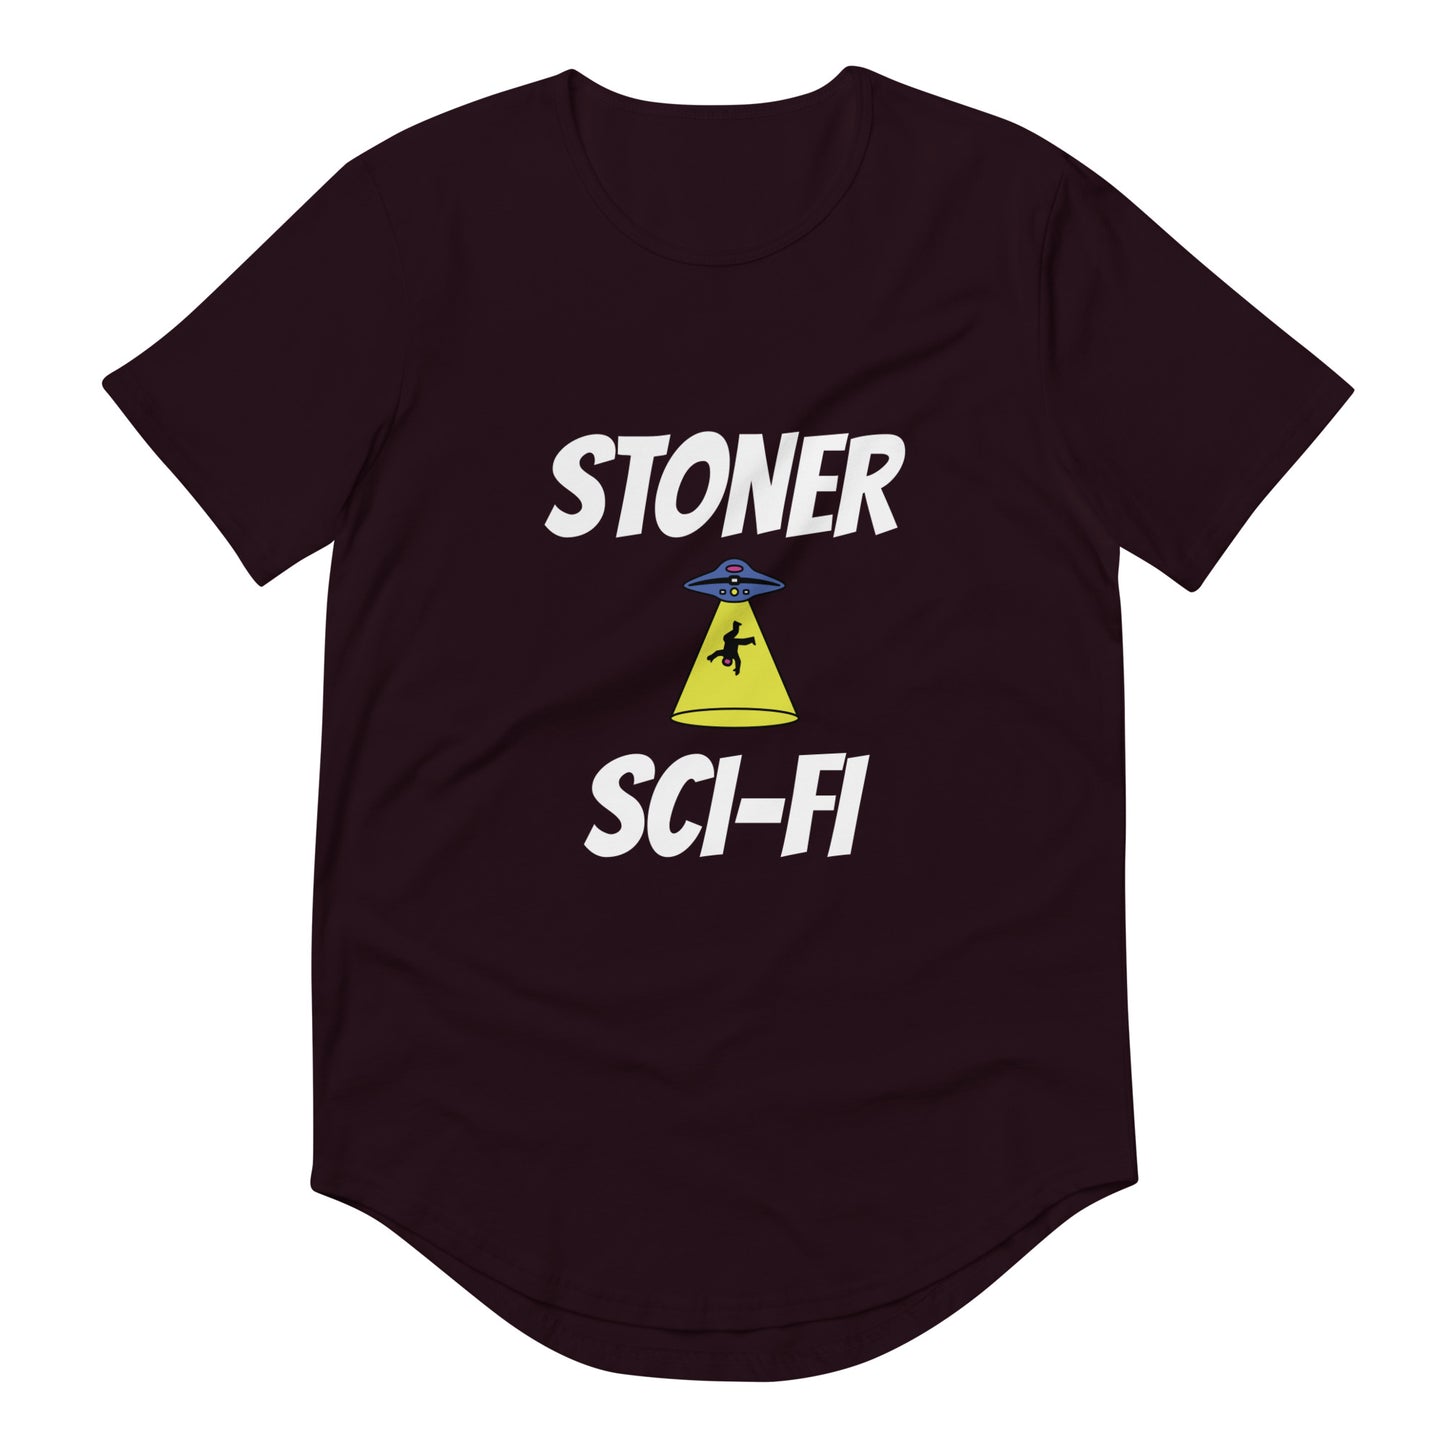 Stoner Sci-Fi T-Shirt